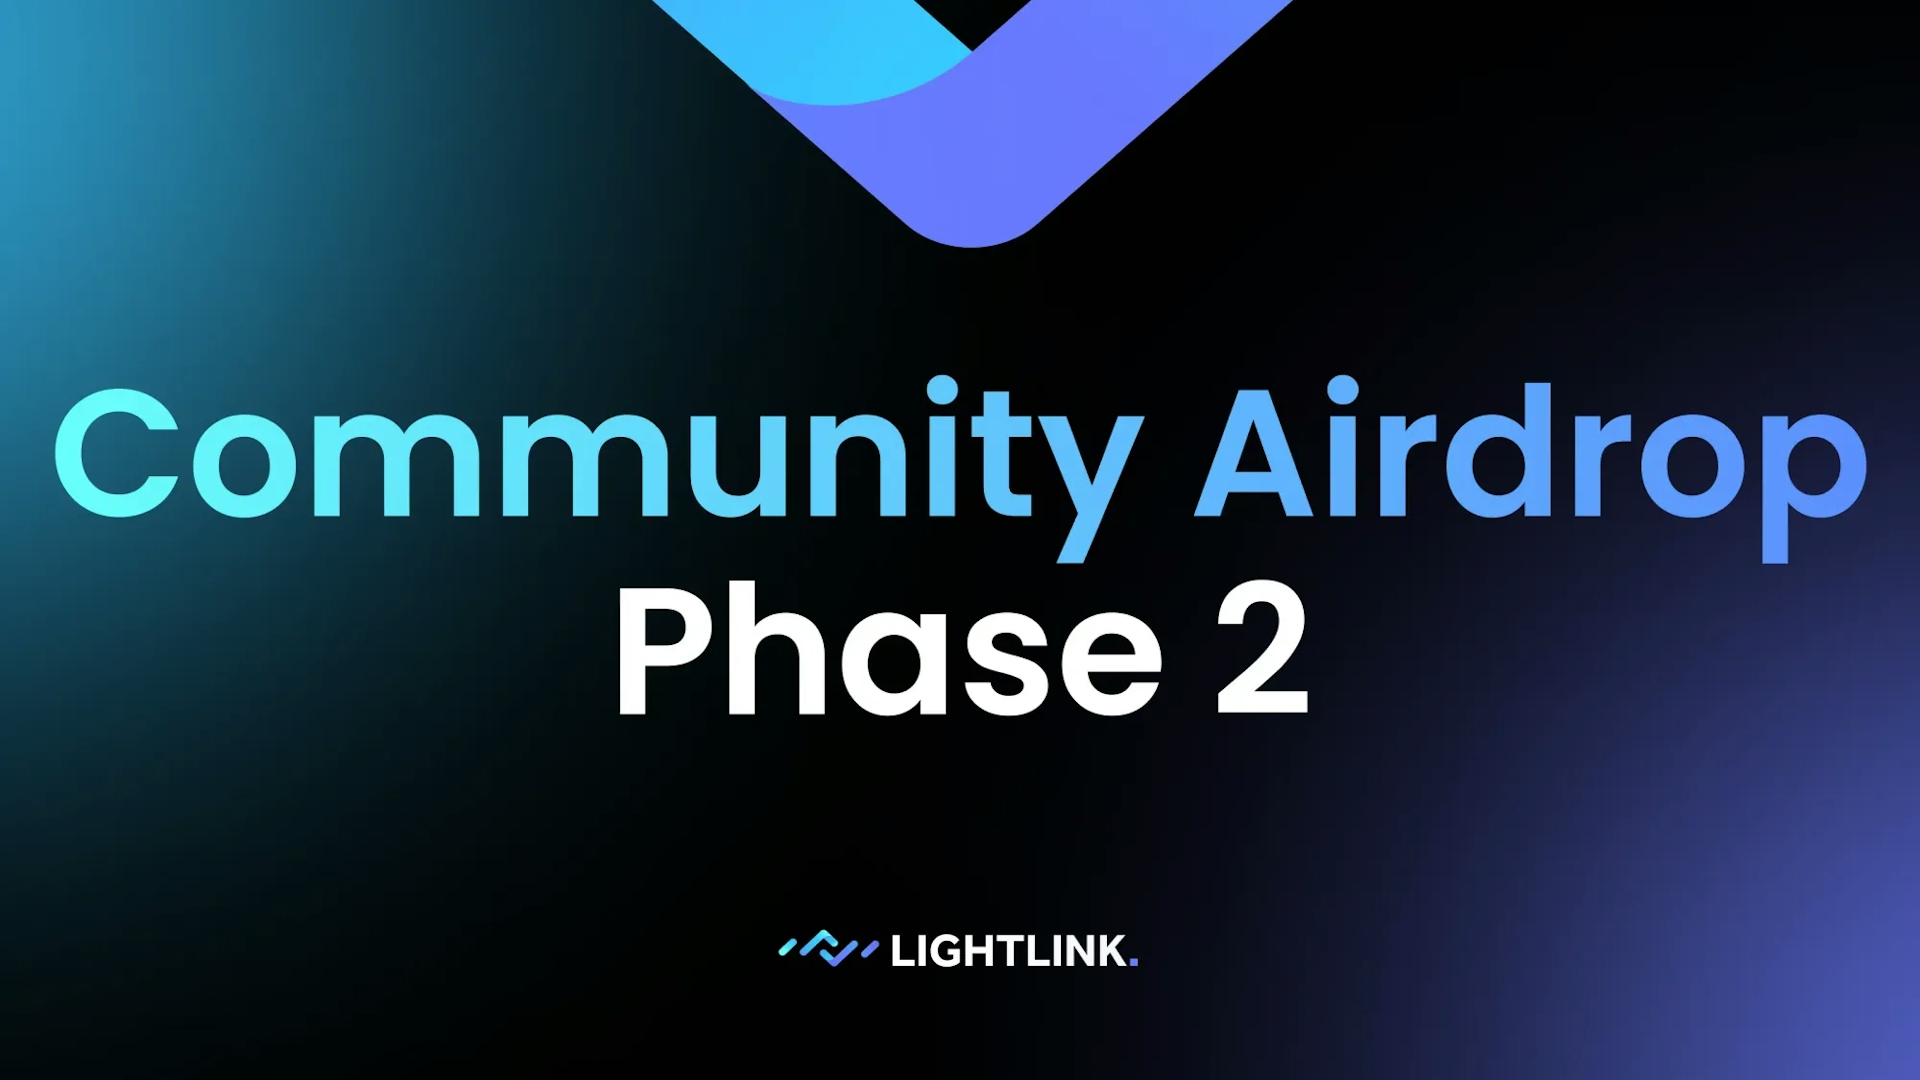 Introducing LightLink Community Airdrop Phase 2